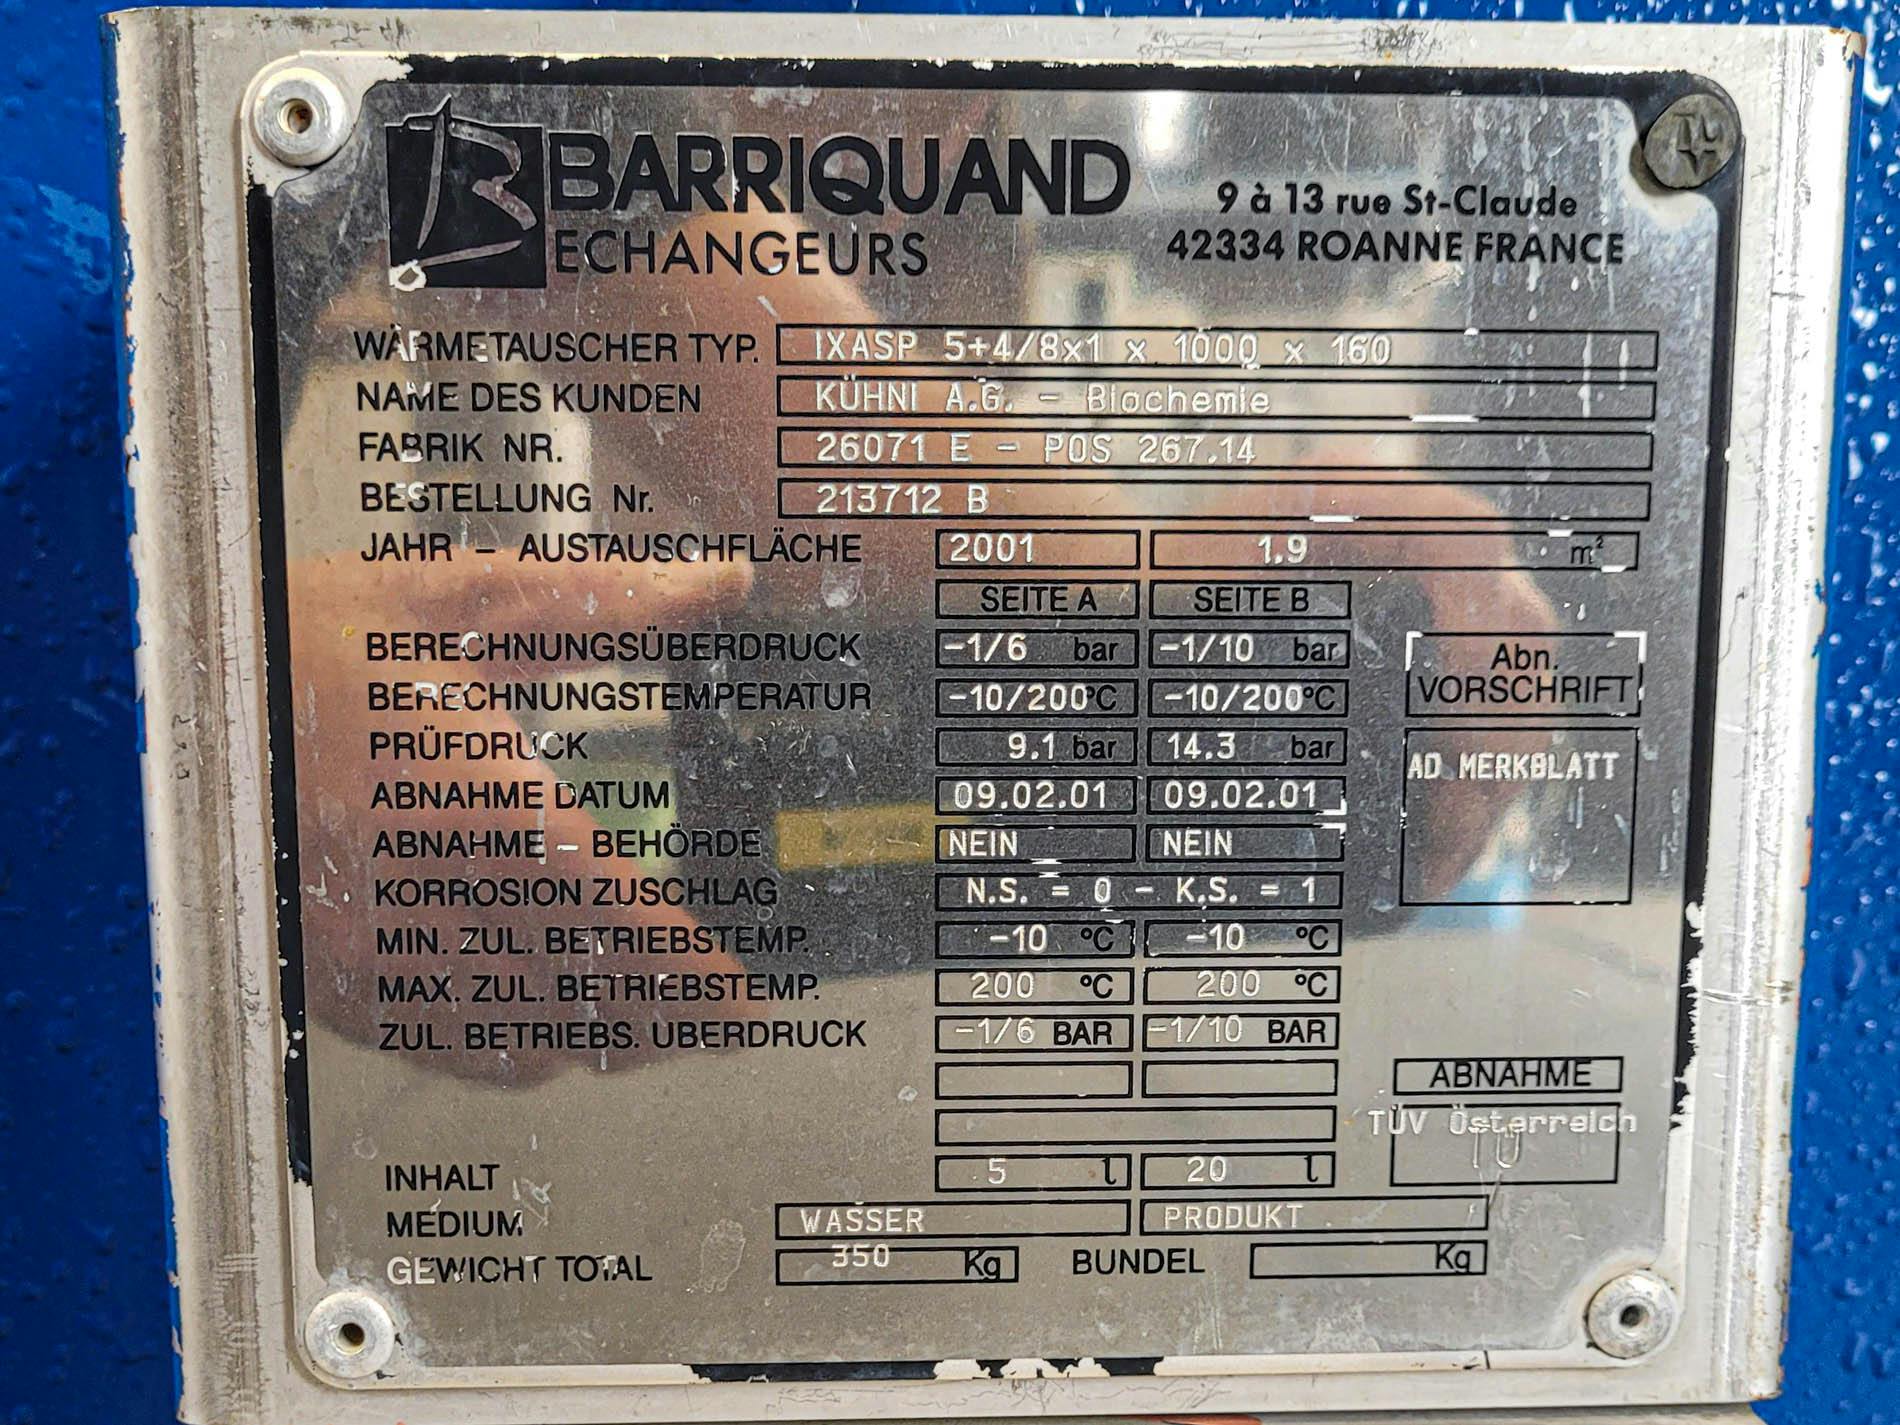 Barriquand IXAP 5+4/8x1 x 1000 x 160 - 1,9 m² - Deskový výmeník tepla - image 9